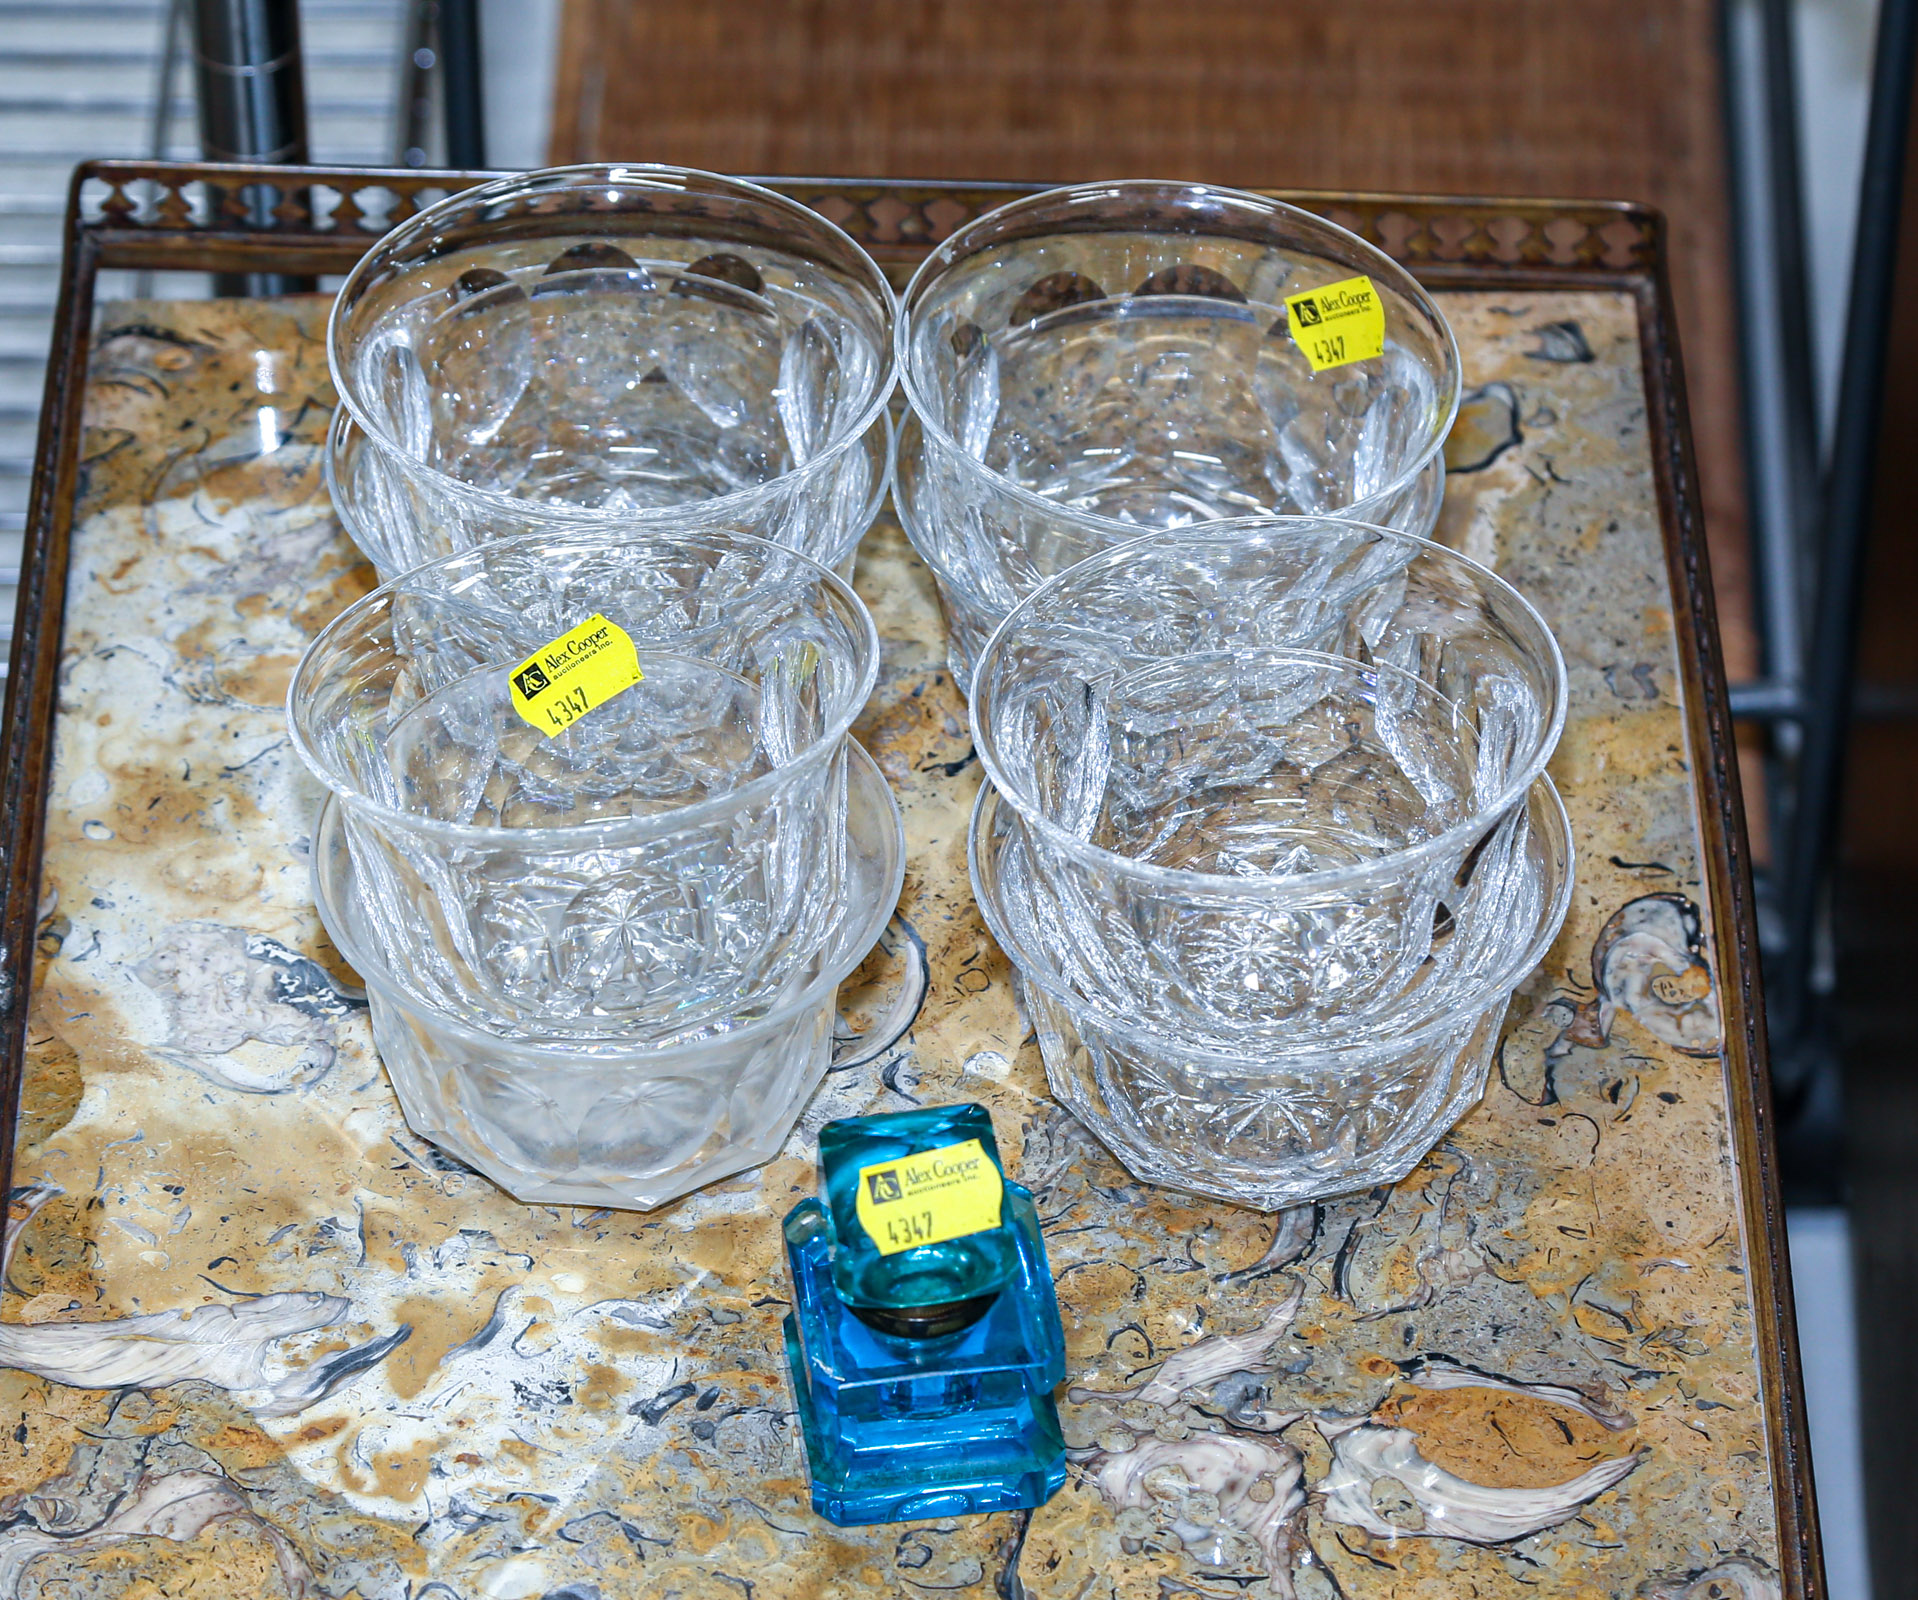 SIX WEBB FINGER BOWLS & ANTIQUE GLASS